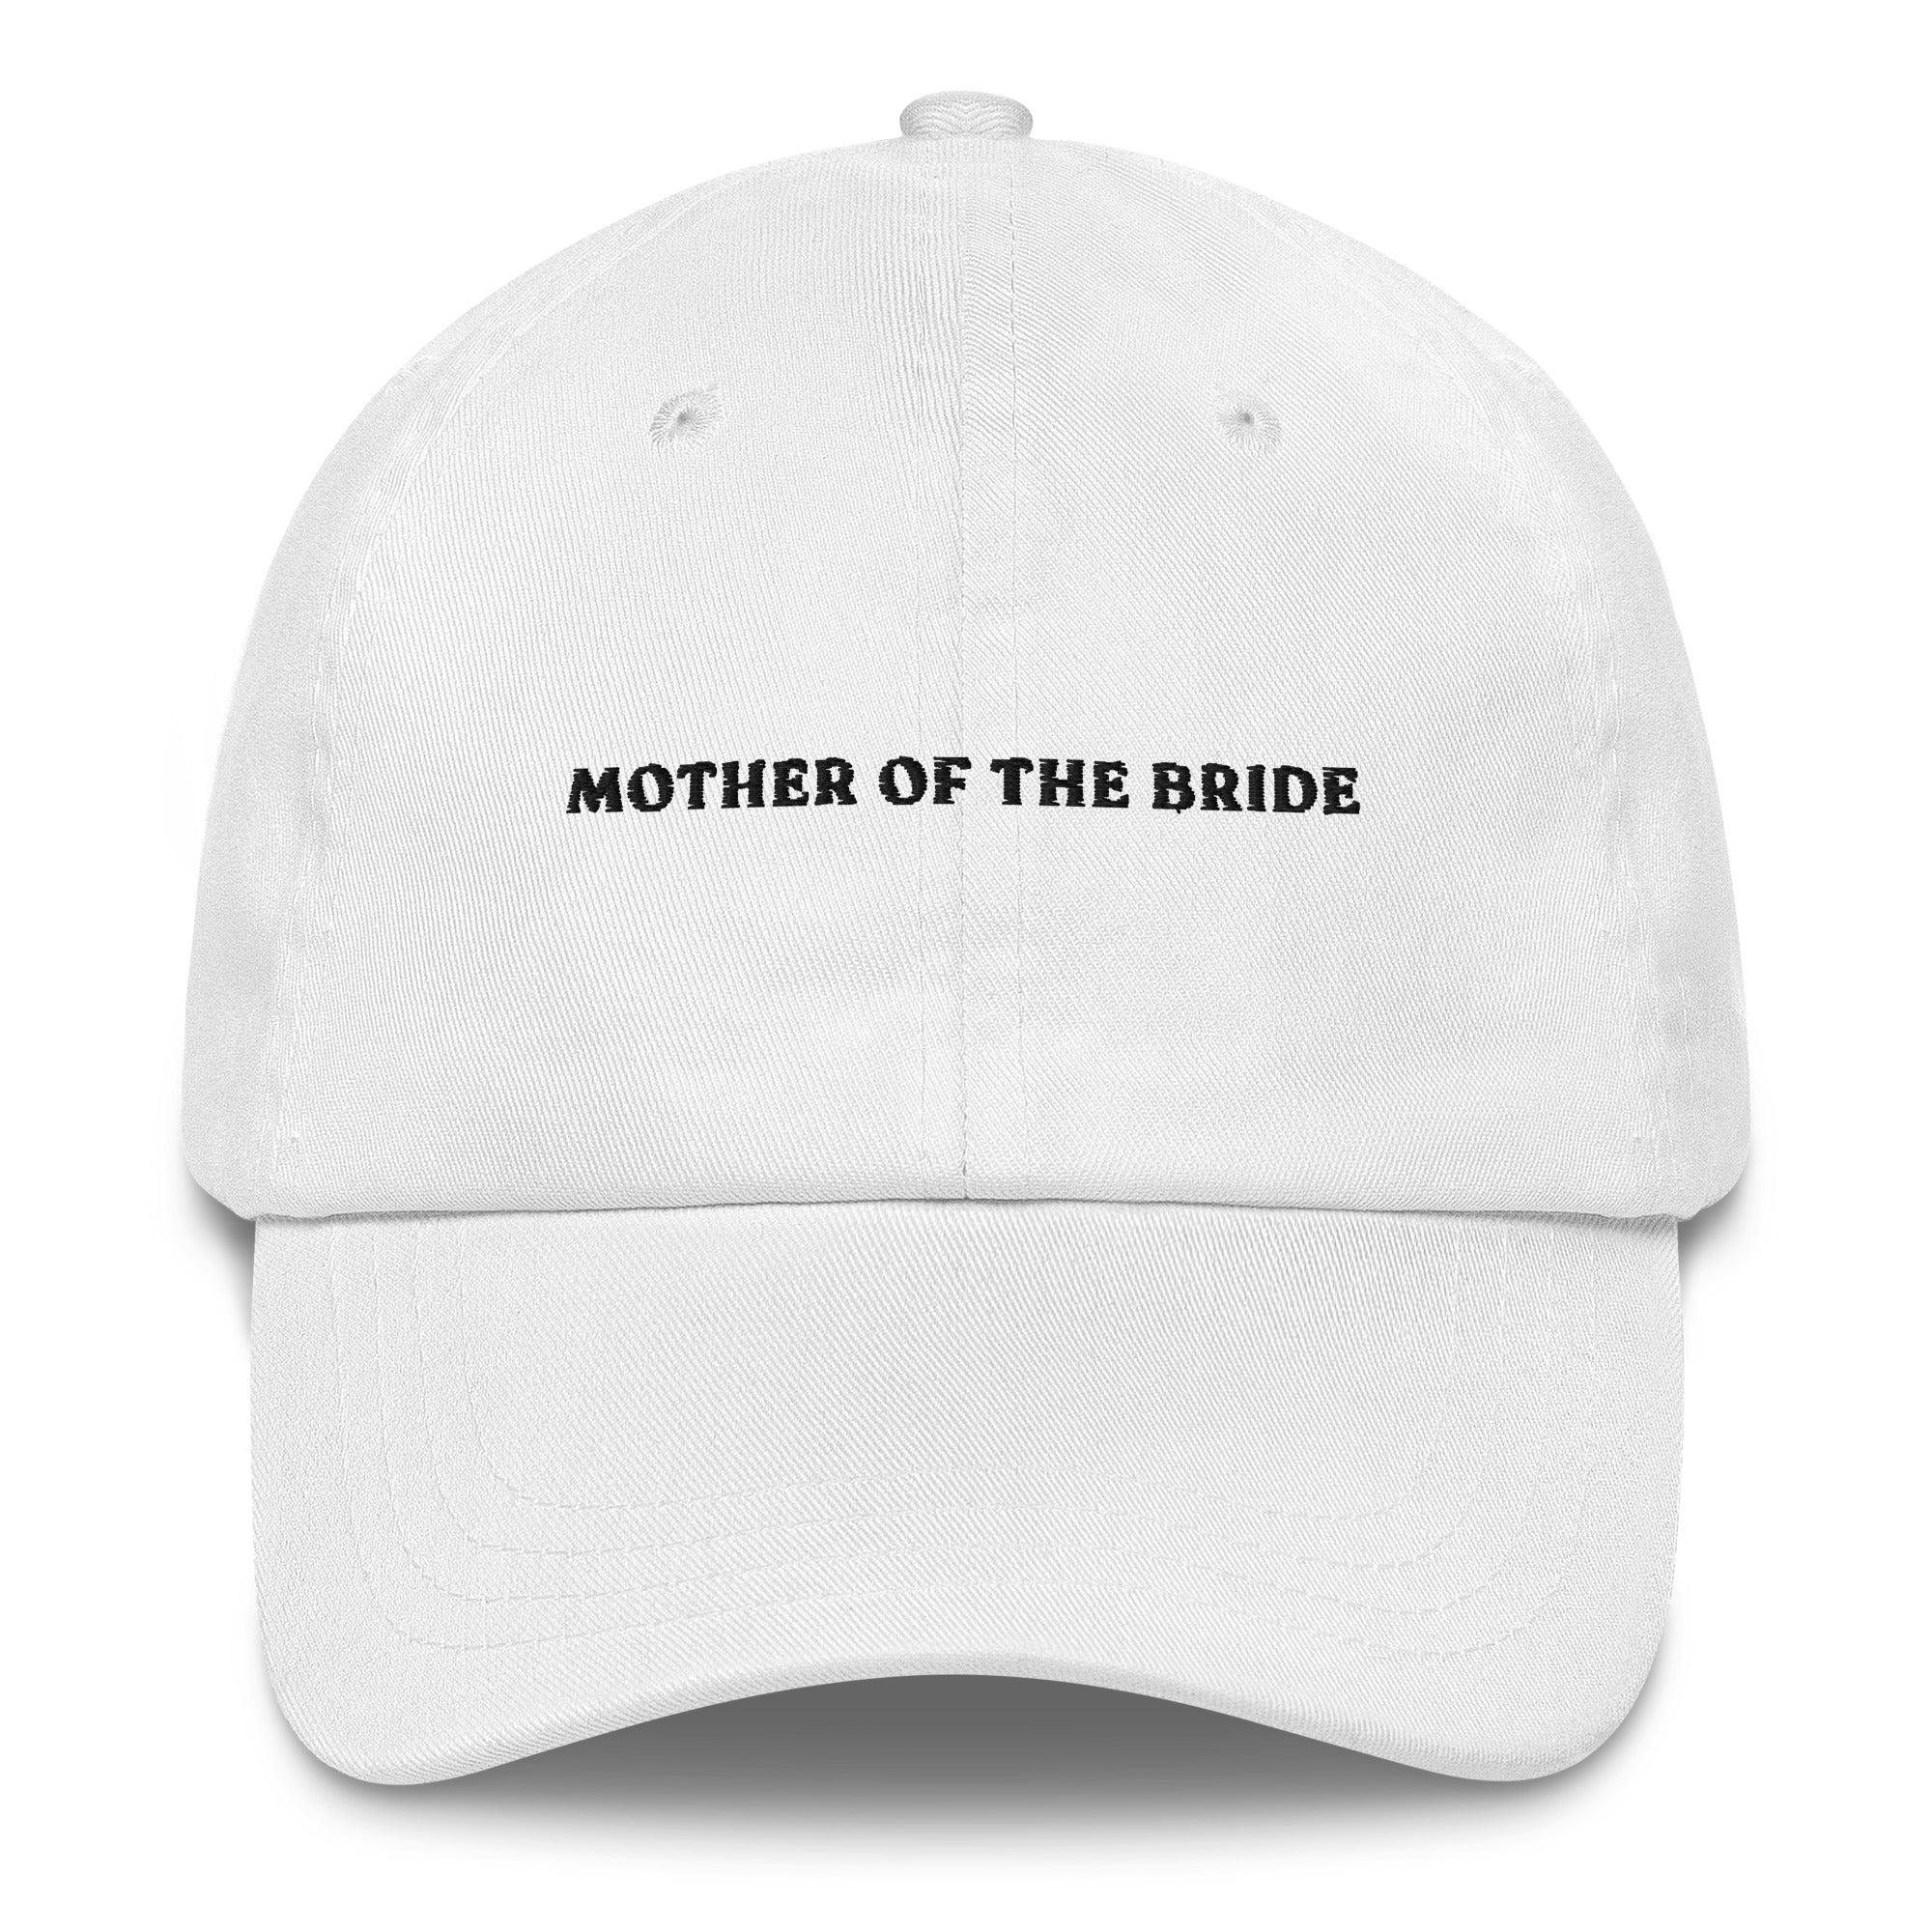 Mother of the bride - Cap